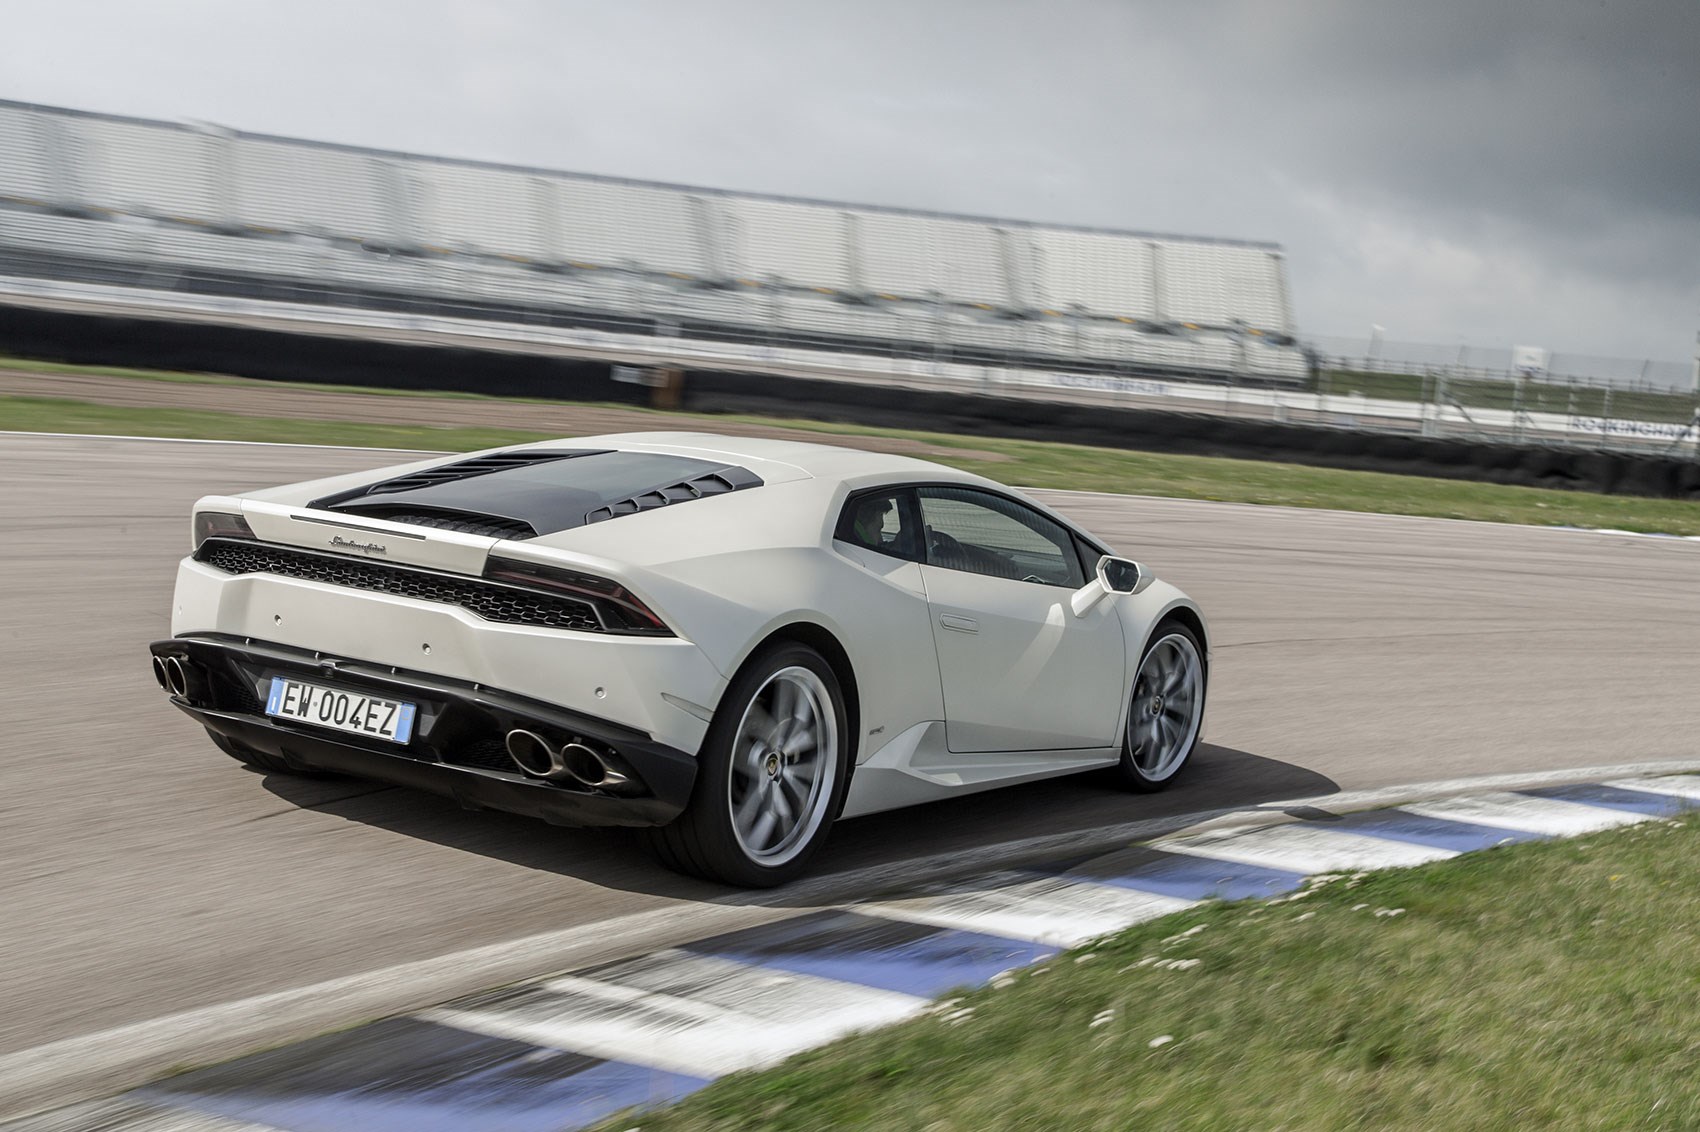 Lamborghini Huracan Evo Review - Exotic Car Rental Blog - mph club